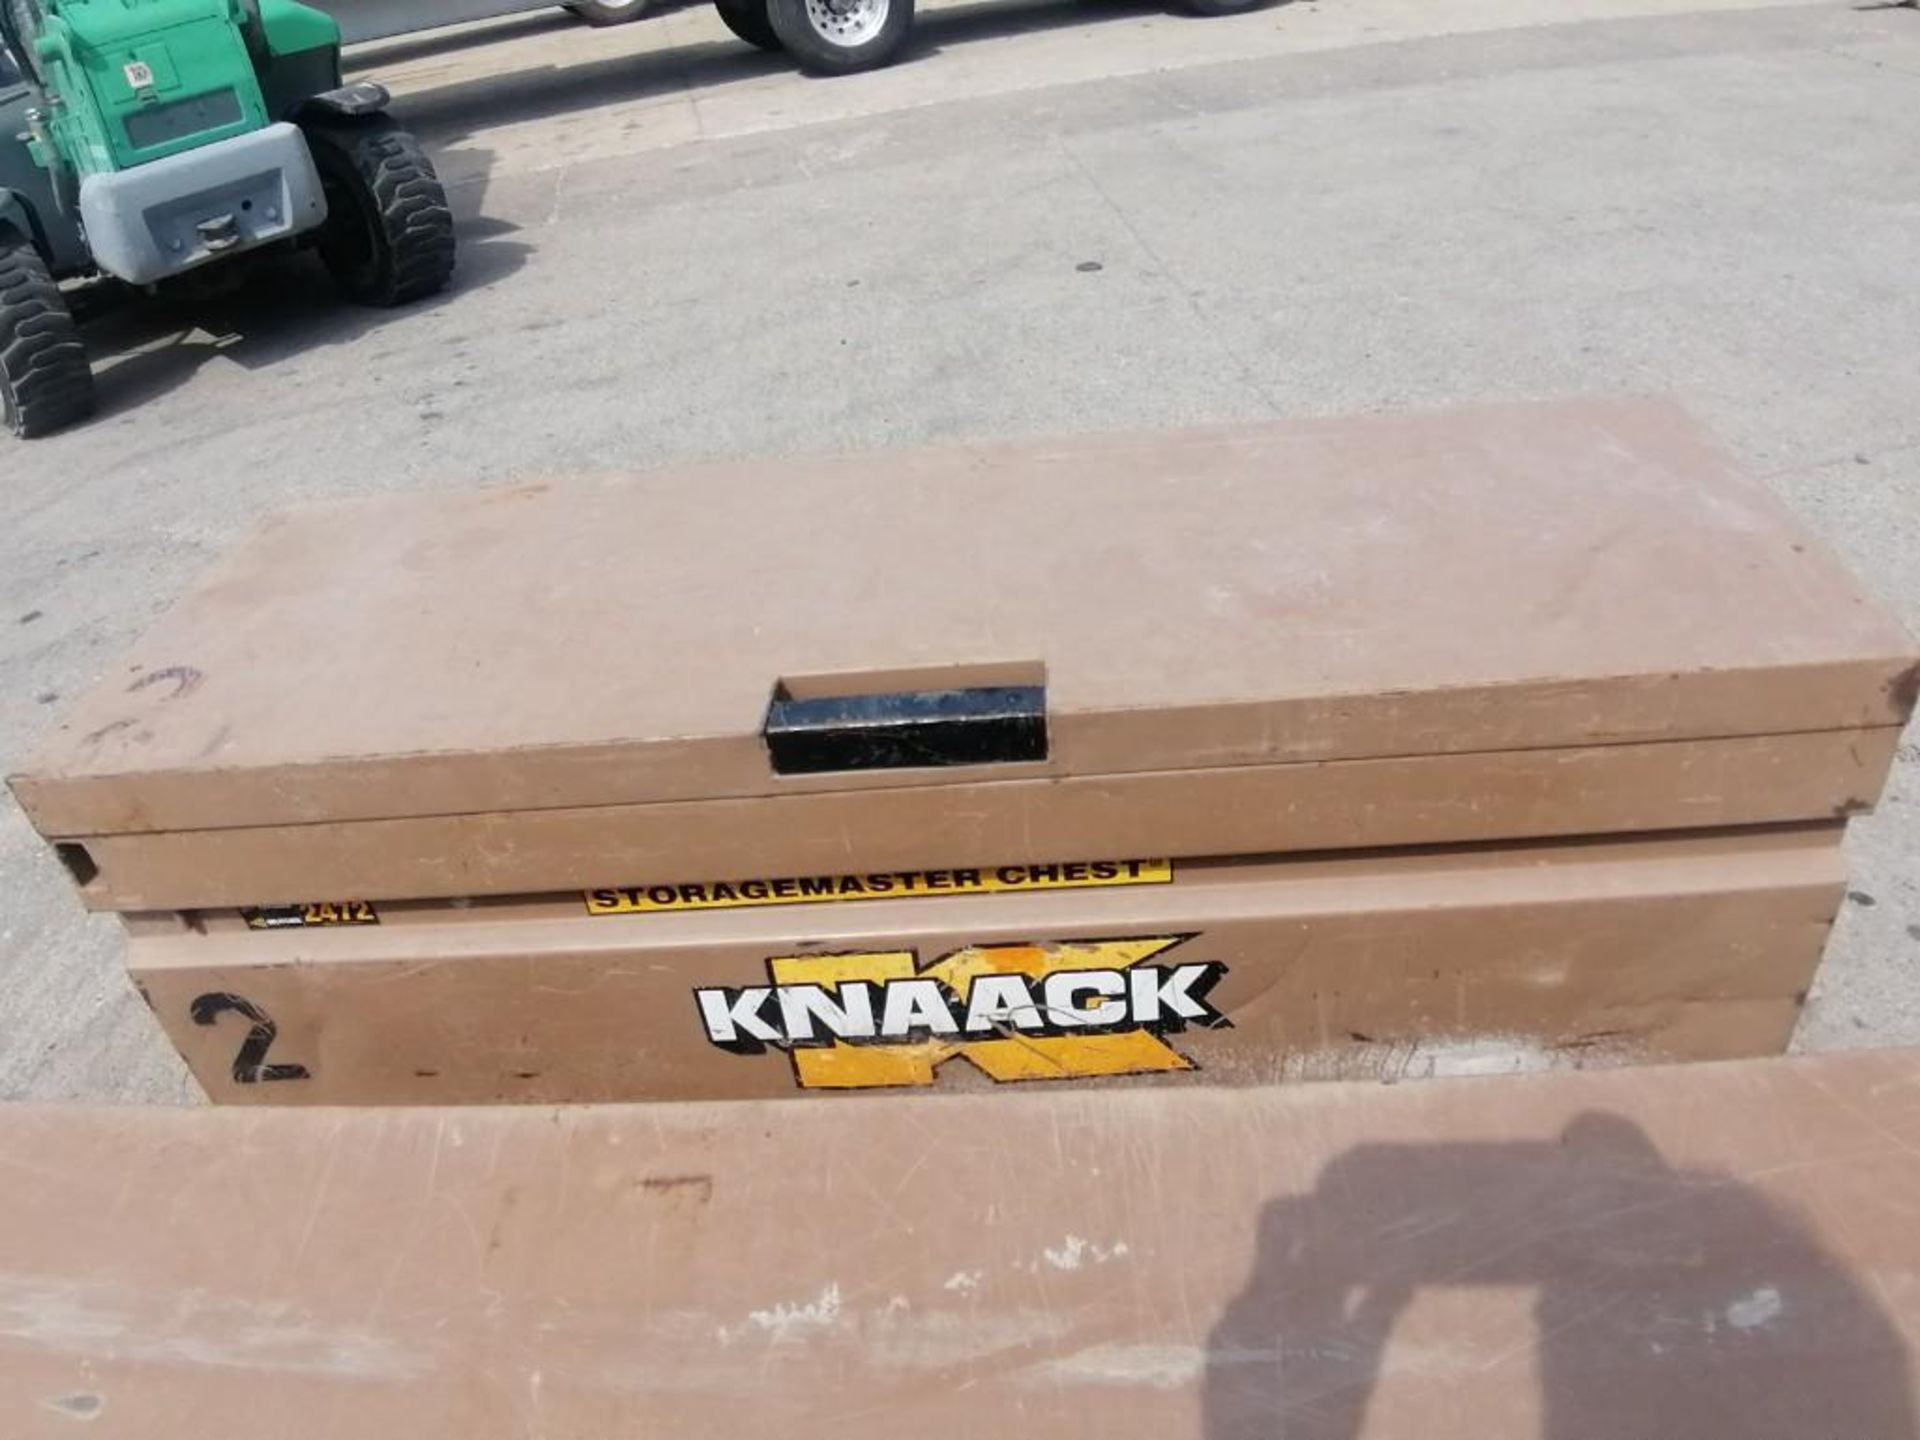 KNAACK Job Box Model 2472. Located at 301 E Henry Street, Mt. Pleasant, IA 52641.